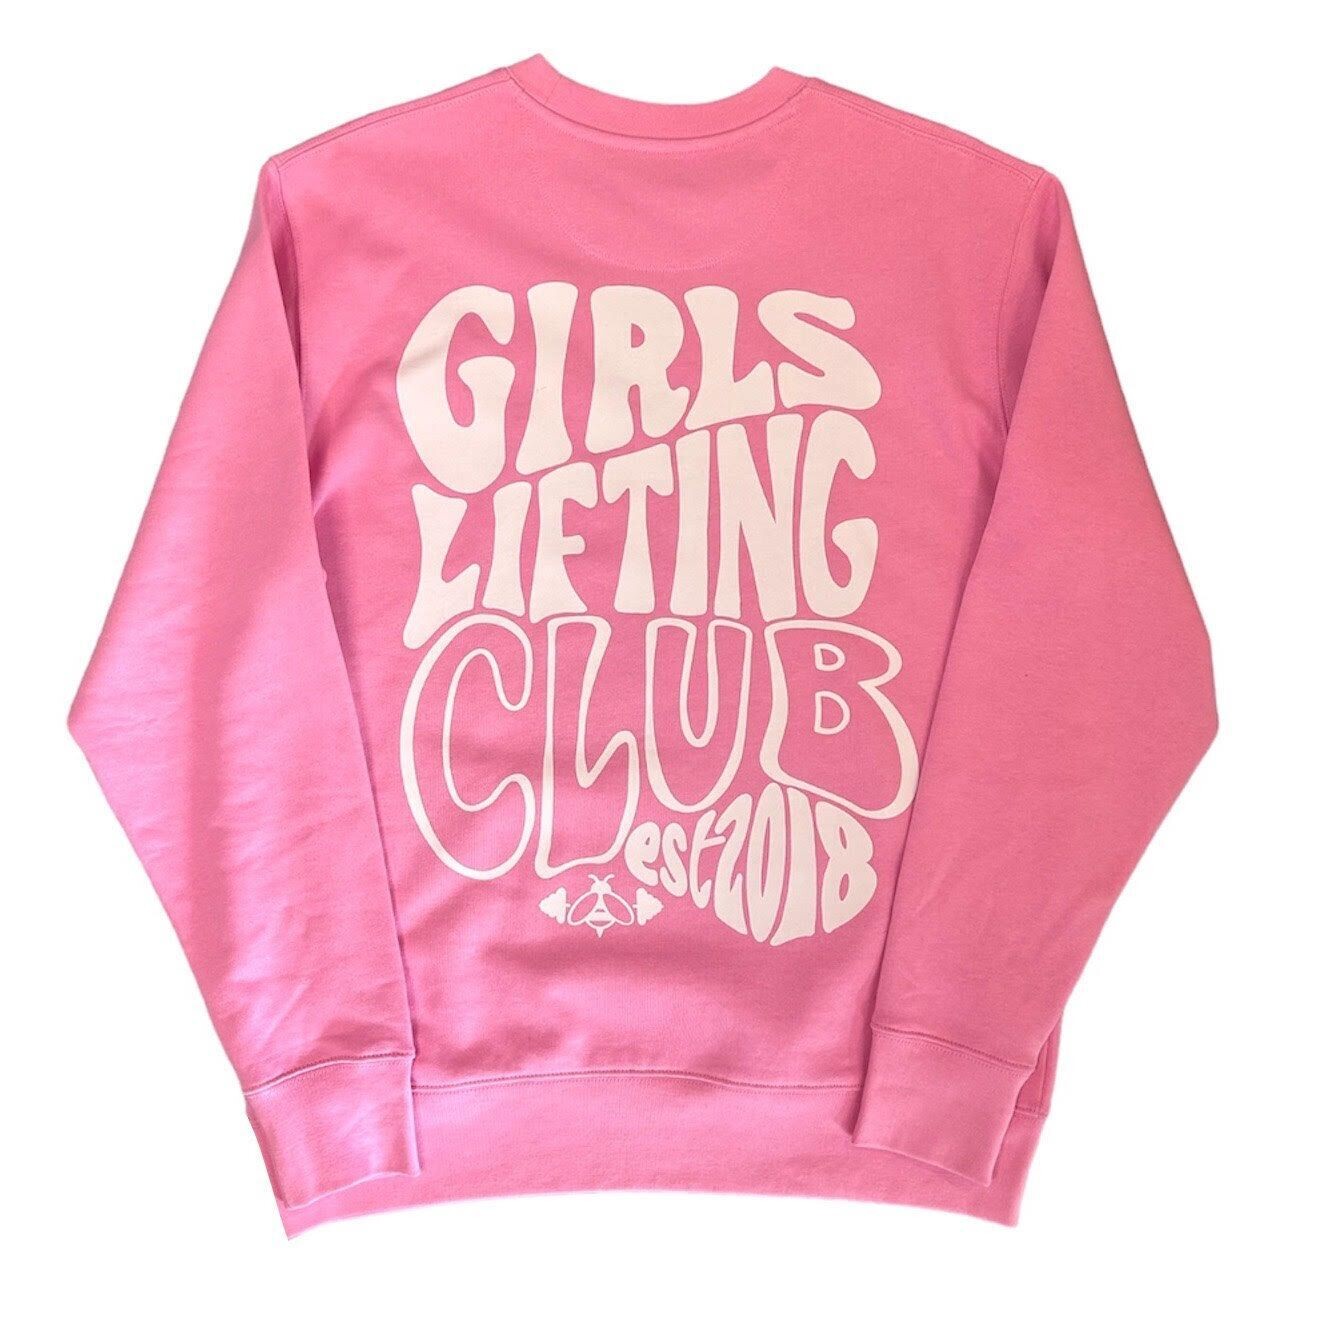 Girls Lifting Club Sweatshirt - PREMIUM - PINK & WHITE